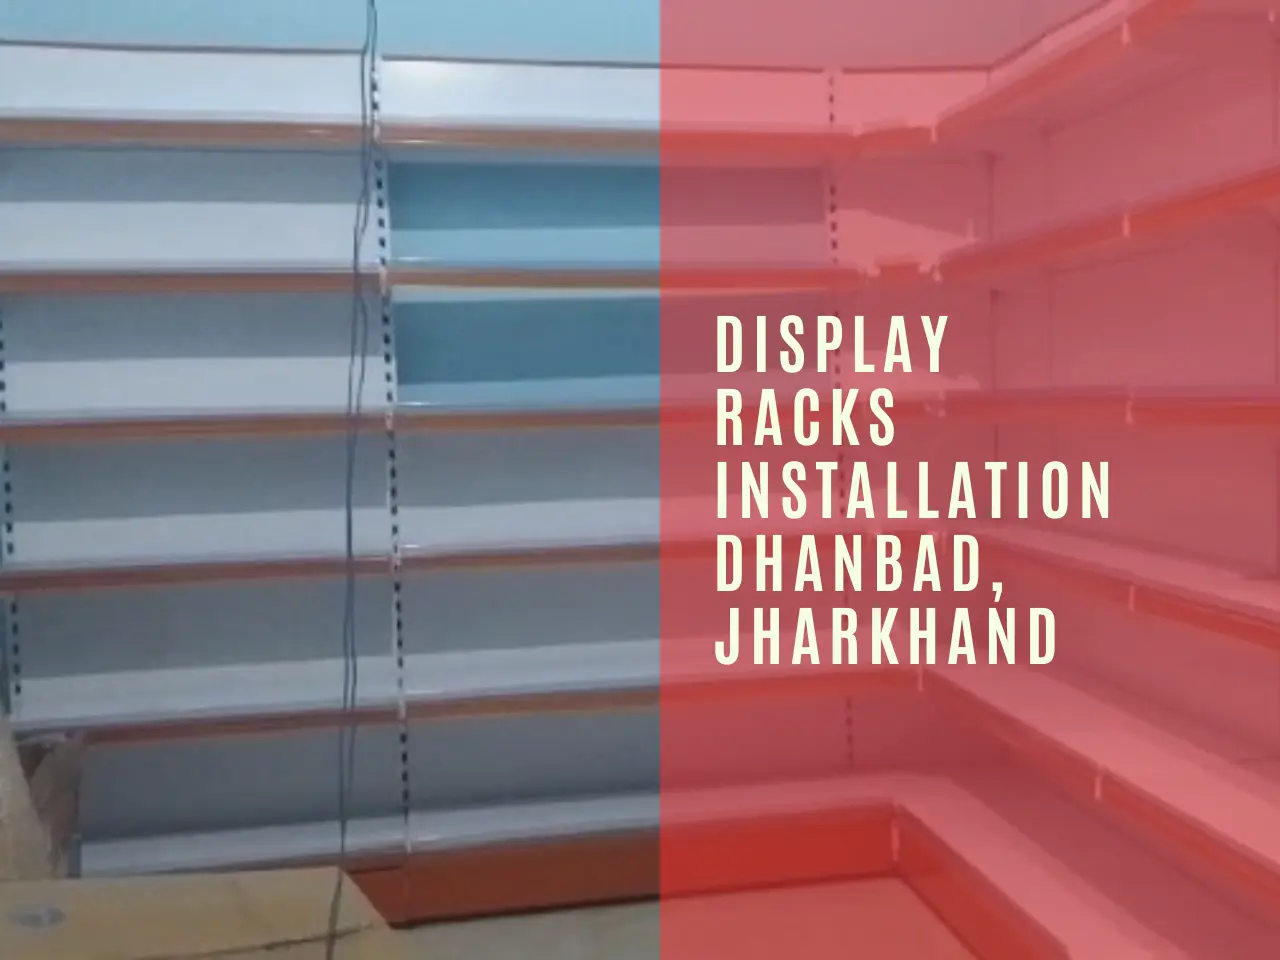 Display Racks installation Dhanbad.webp